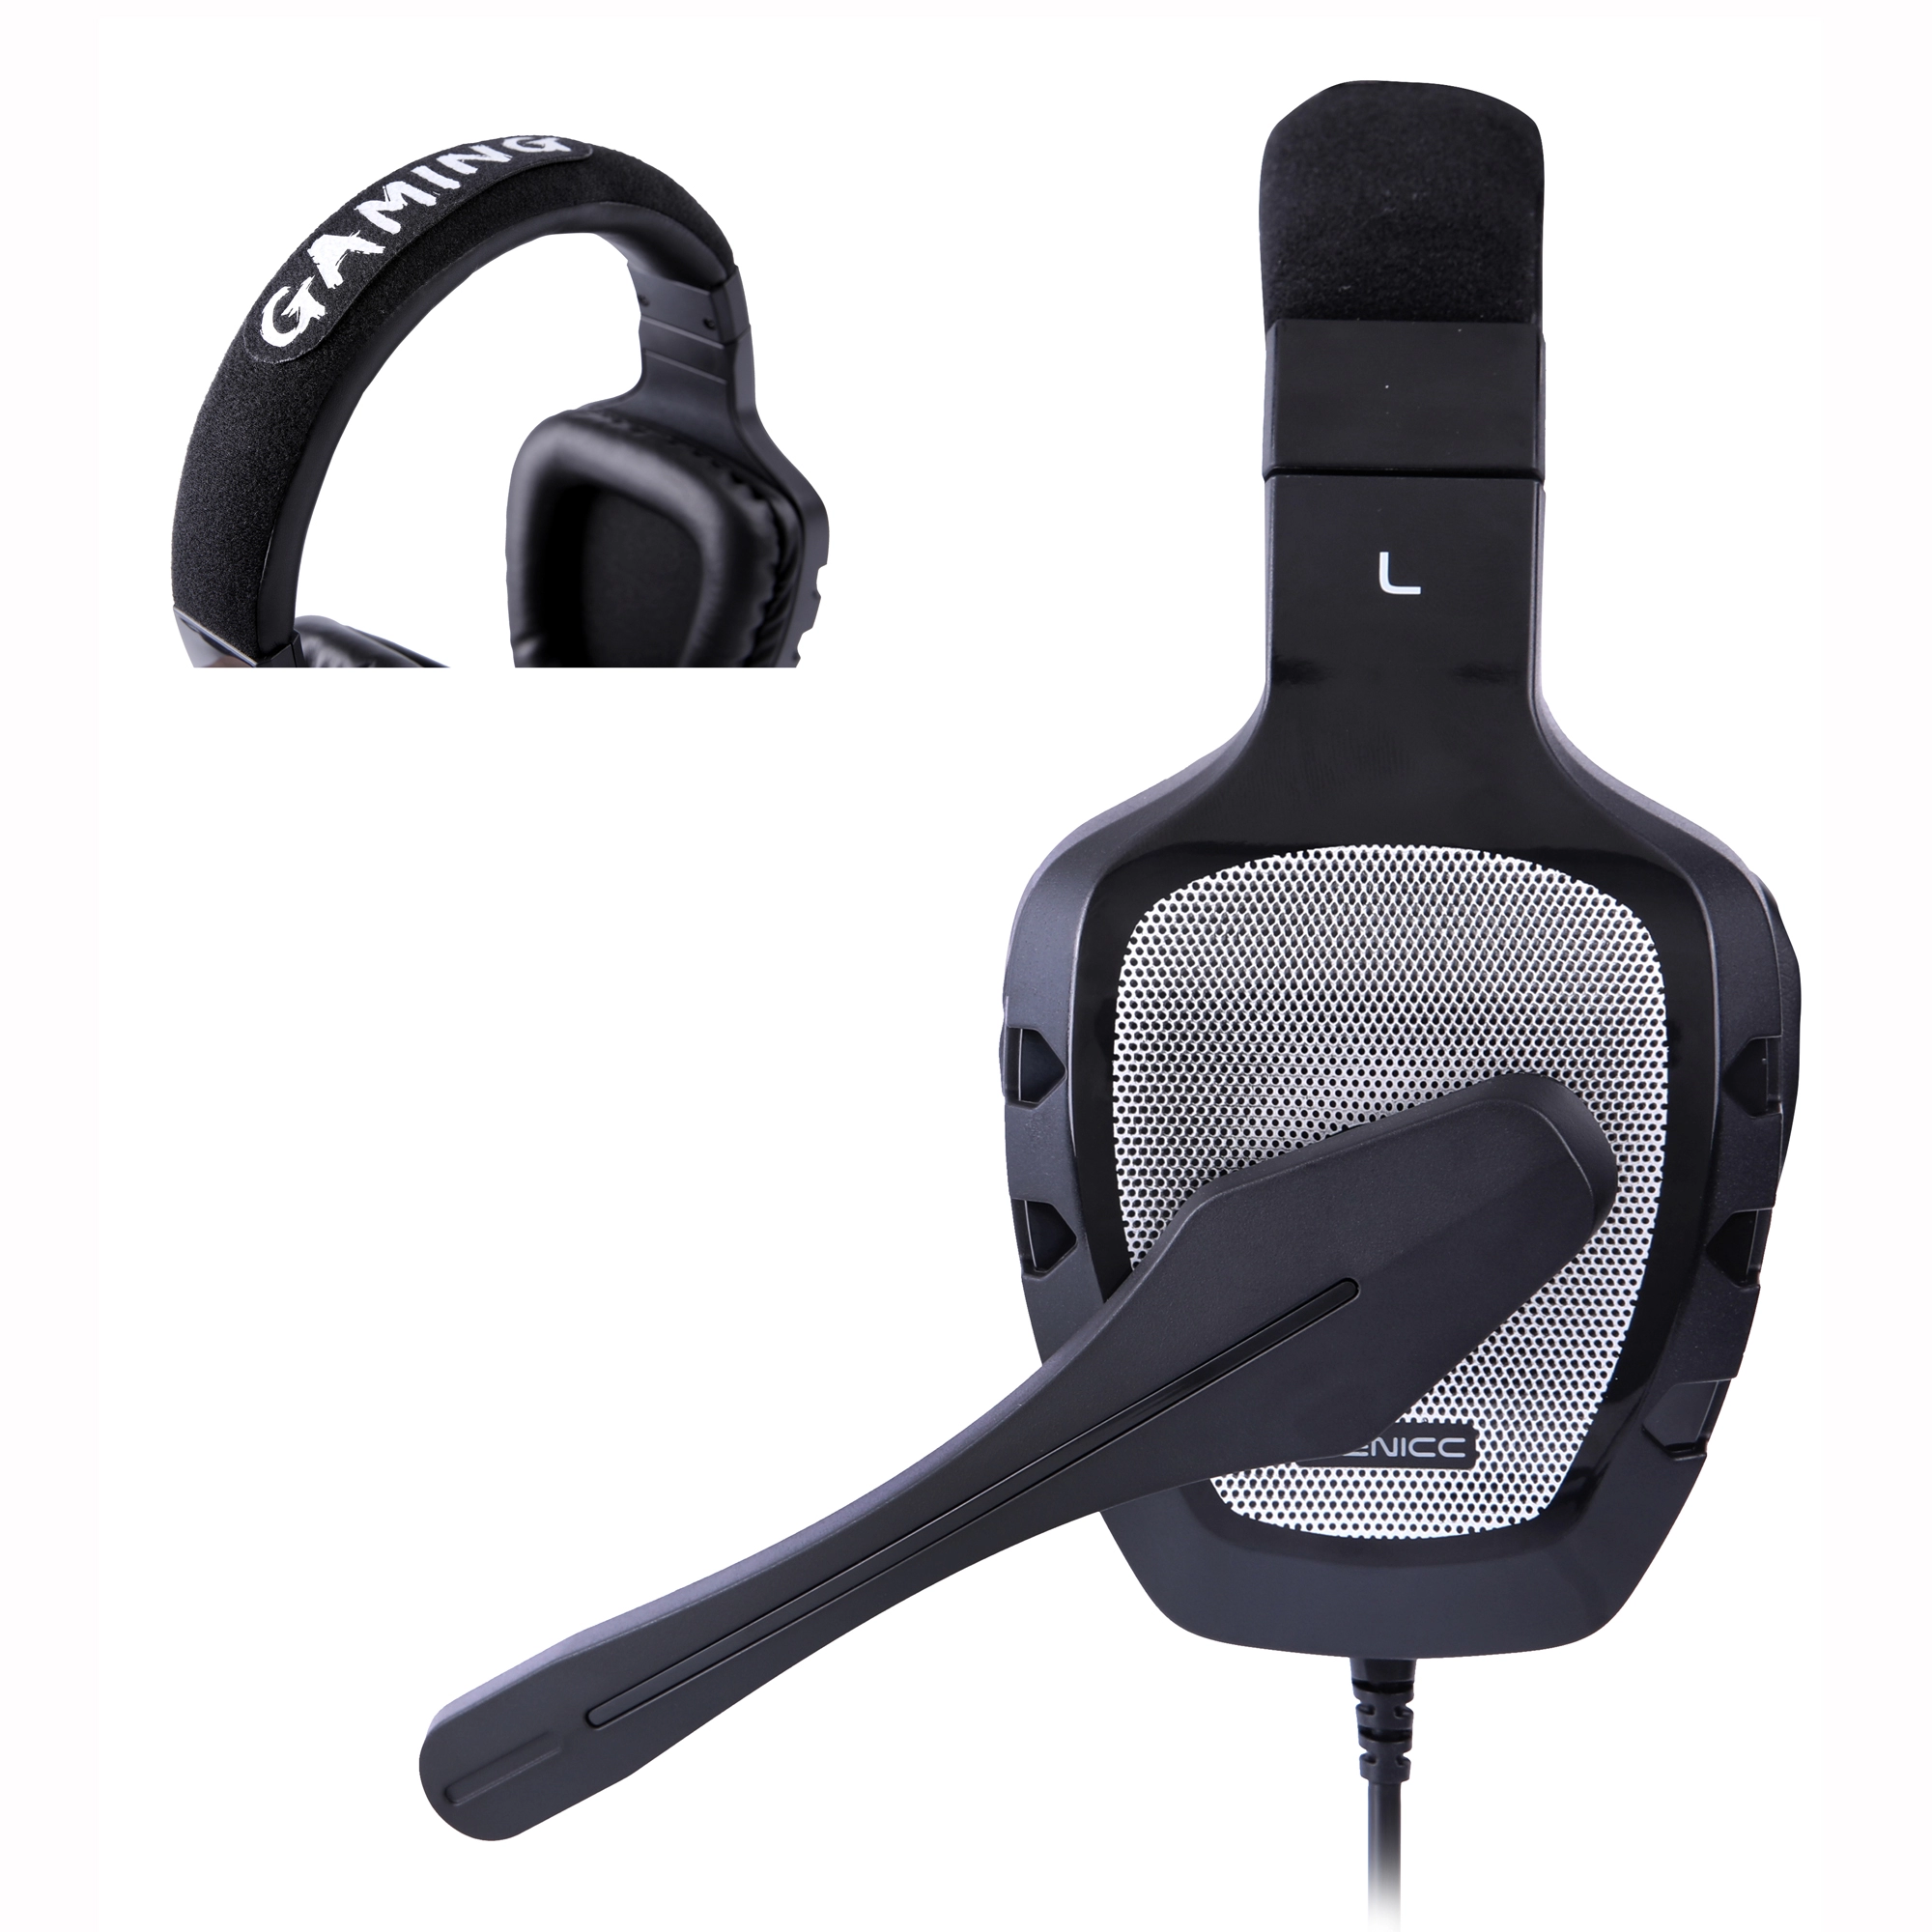 Somic A1 stereo 3,5 mm plug gaming bedrade headset telefoon goedkope headsets mobiele telefoon accessoires oortelefoon hoofdtelefoon